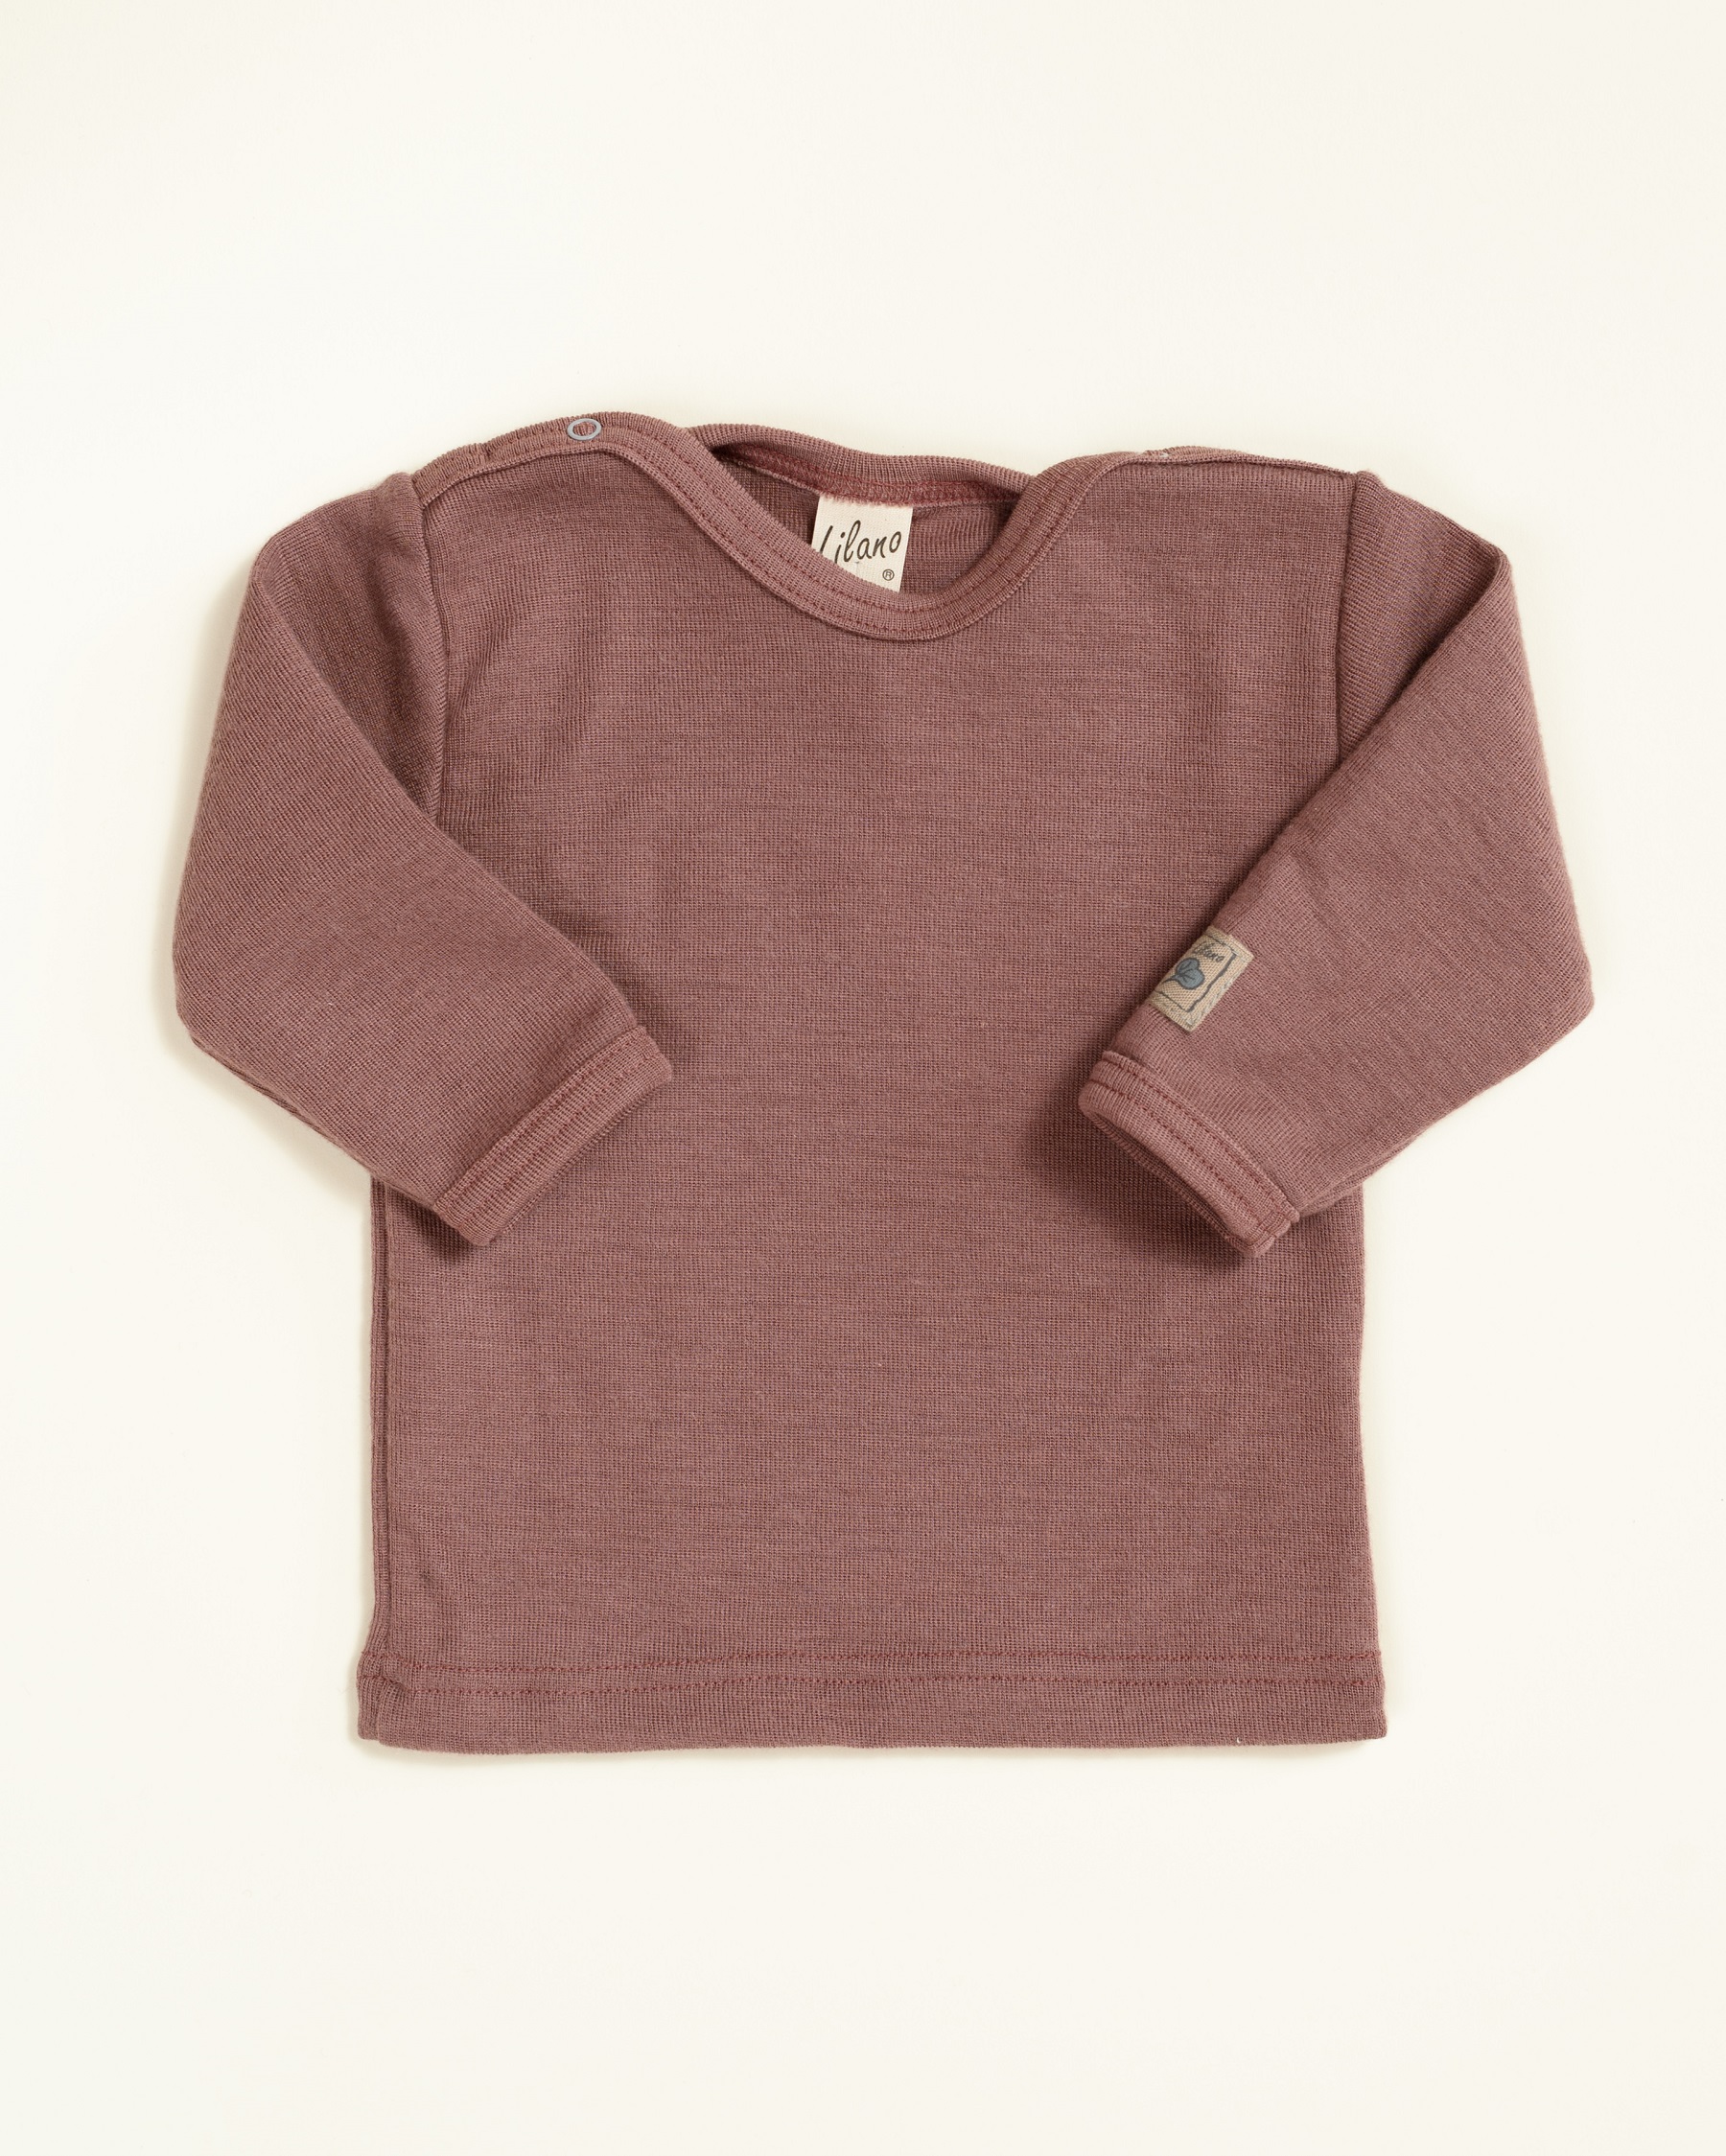 Kinder Shirt aus Wolle / Seide | Lilano